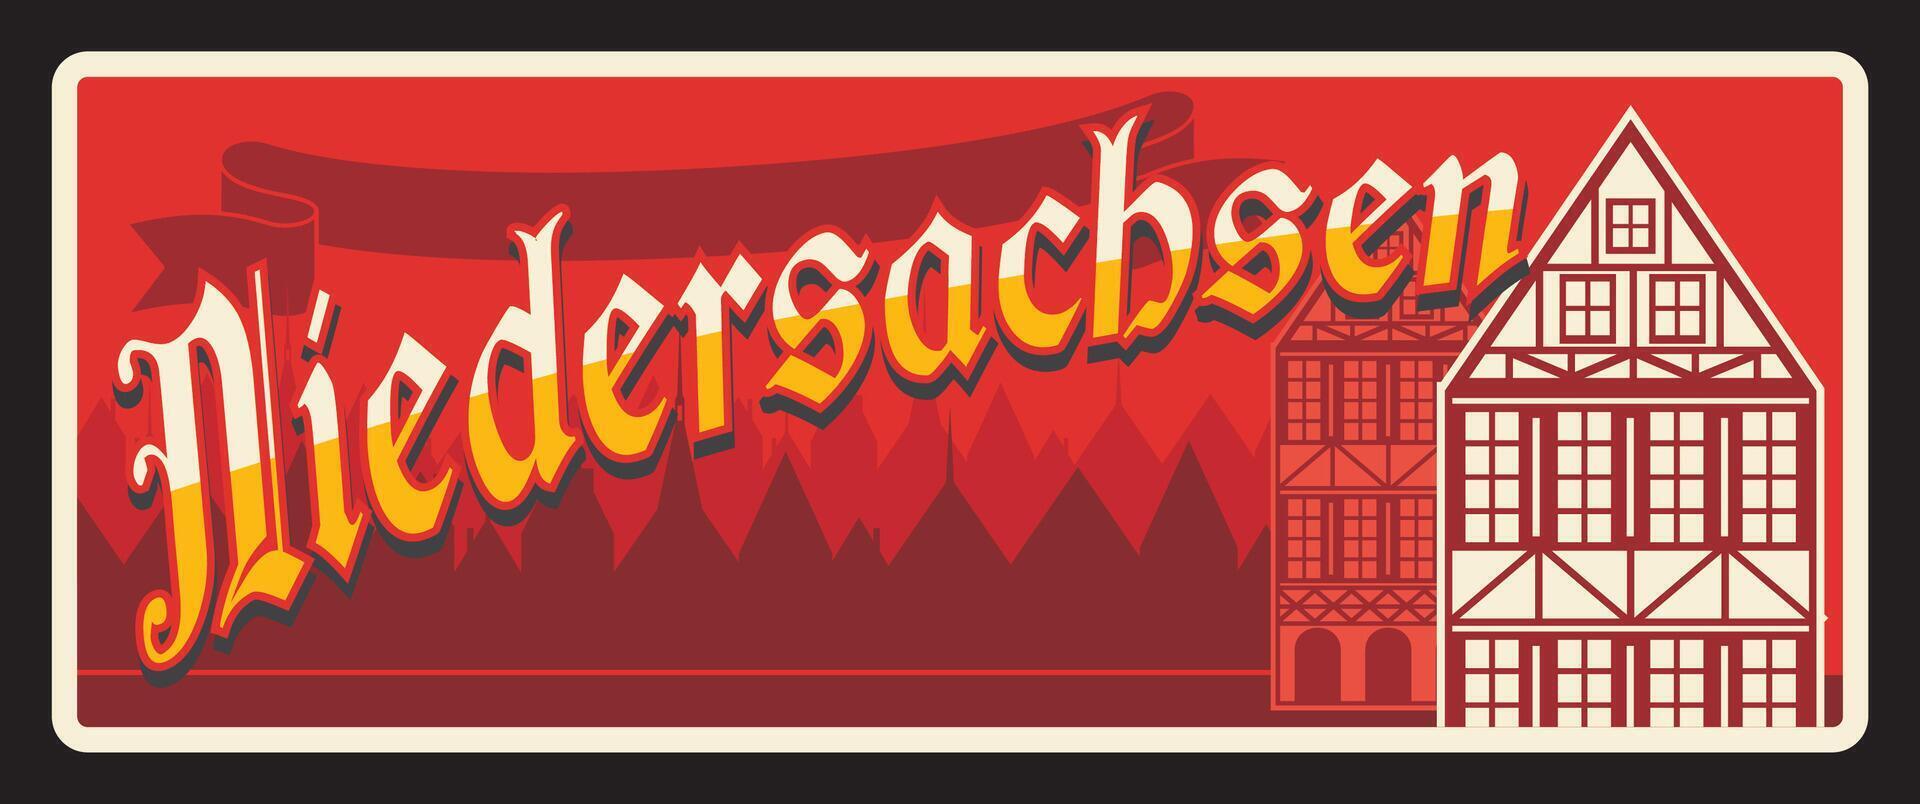 Niedersachsen German city retro travel plate sign vector